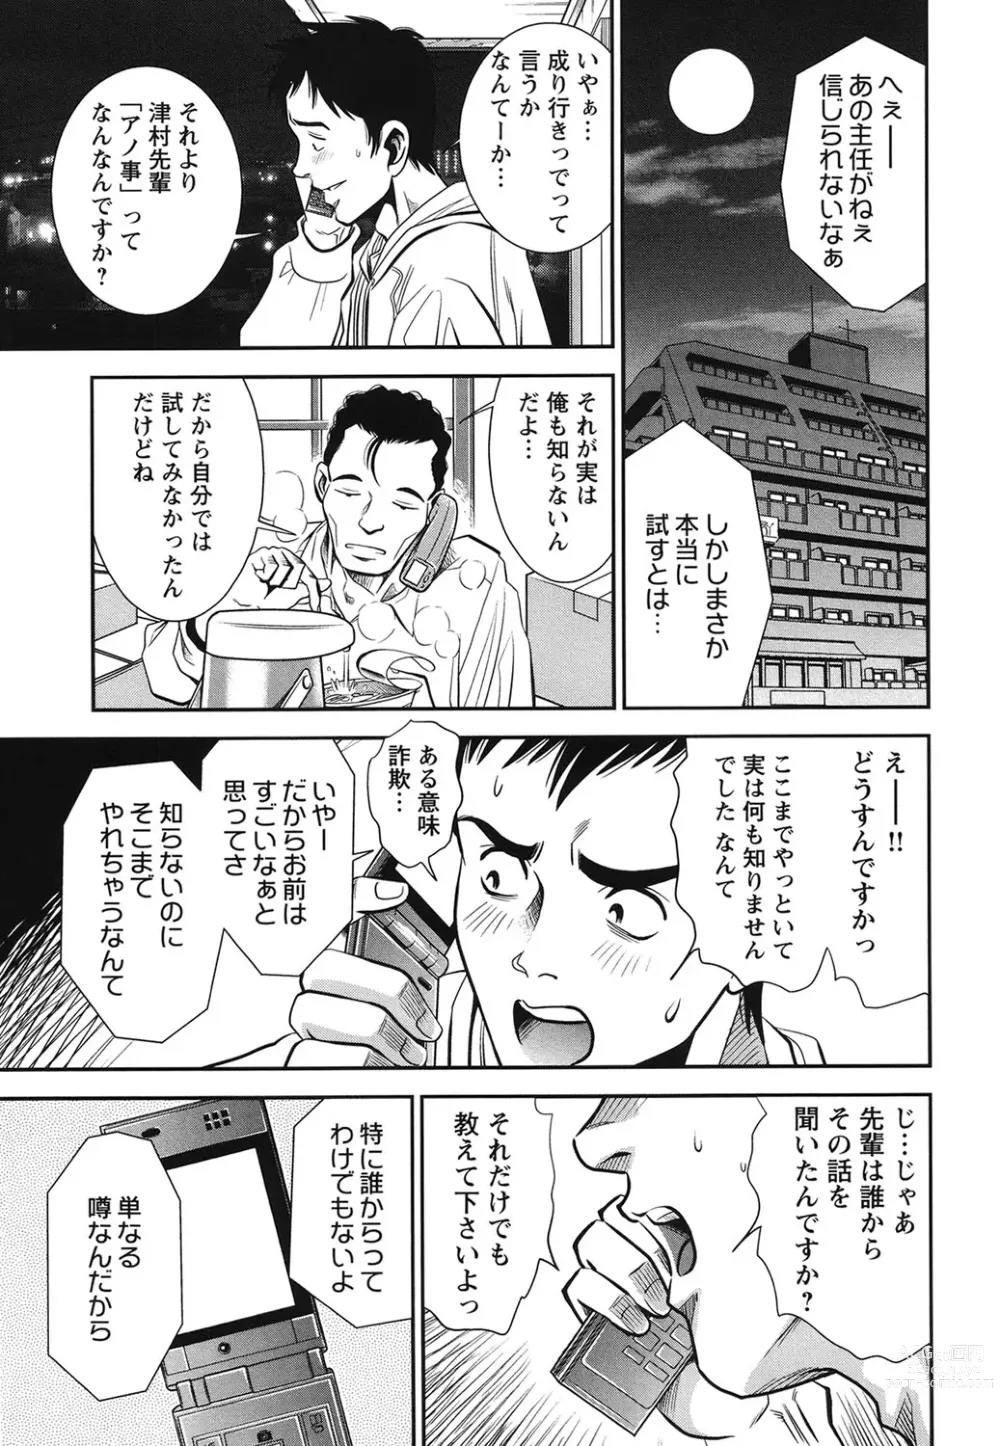 Page 182 of manga Melty Moon Ugly Man Rape